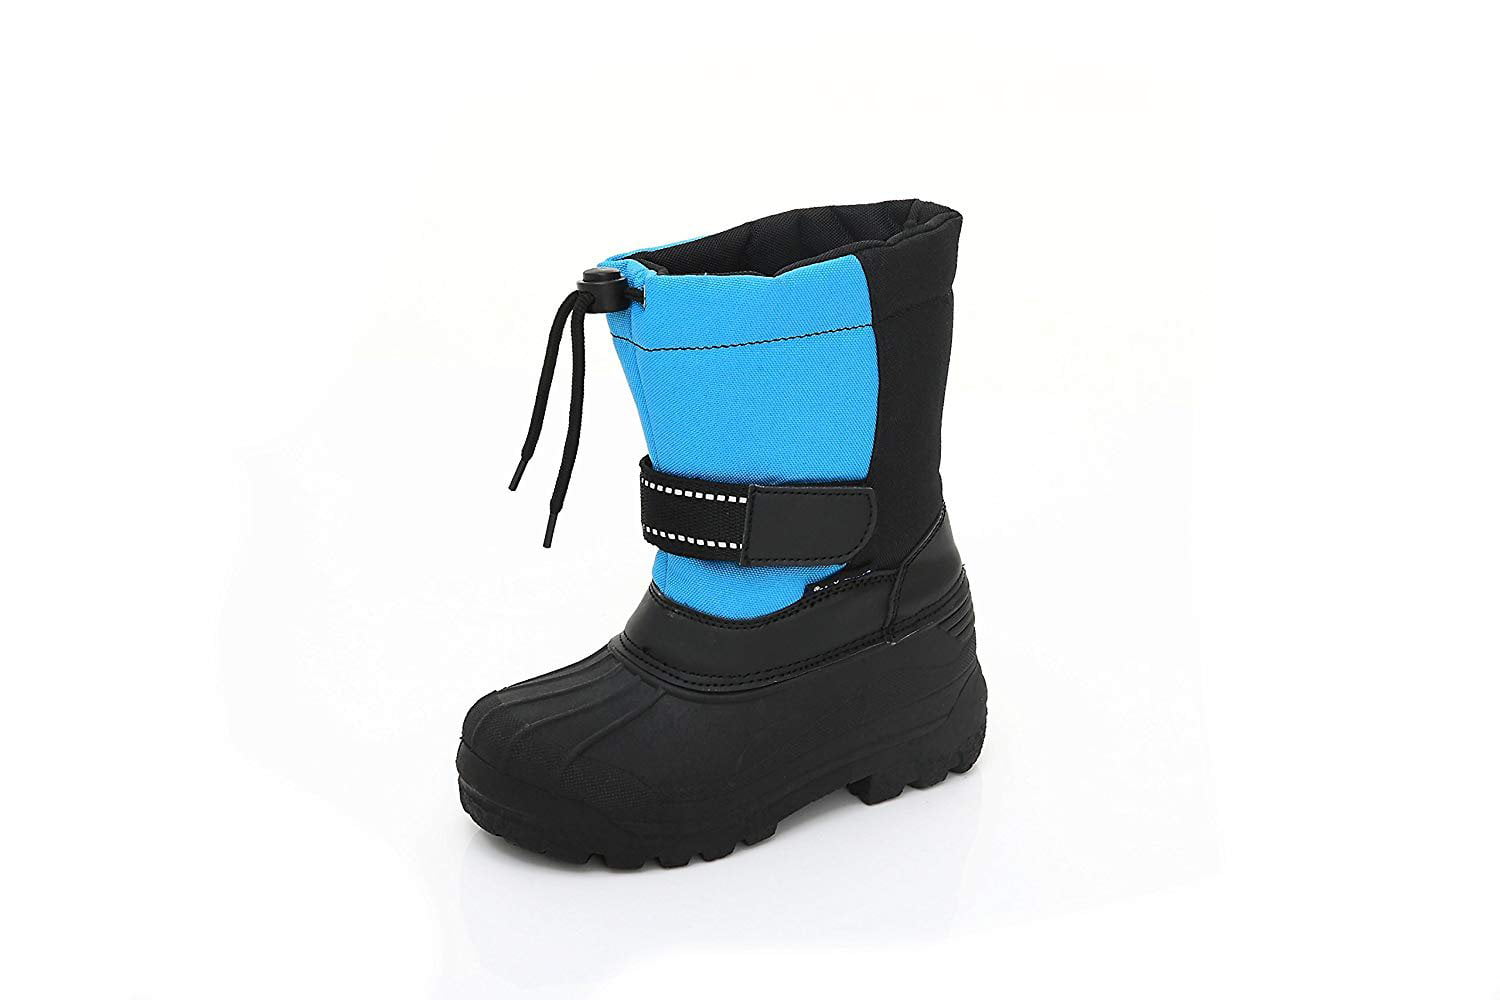 Unisex Kids Winter Snow Boots - Insulated Toddler/Little Kid/Big Kid ...